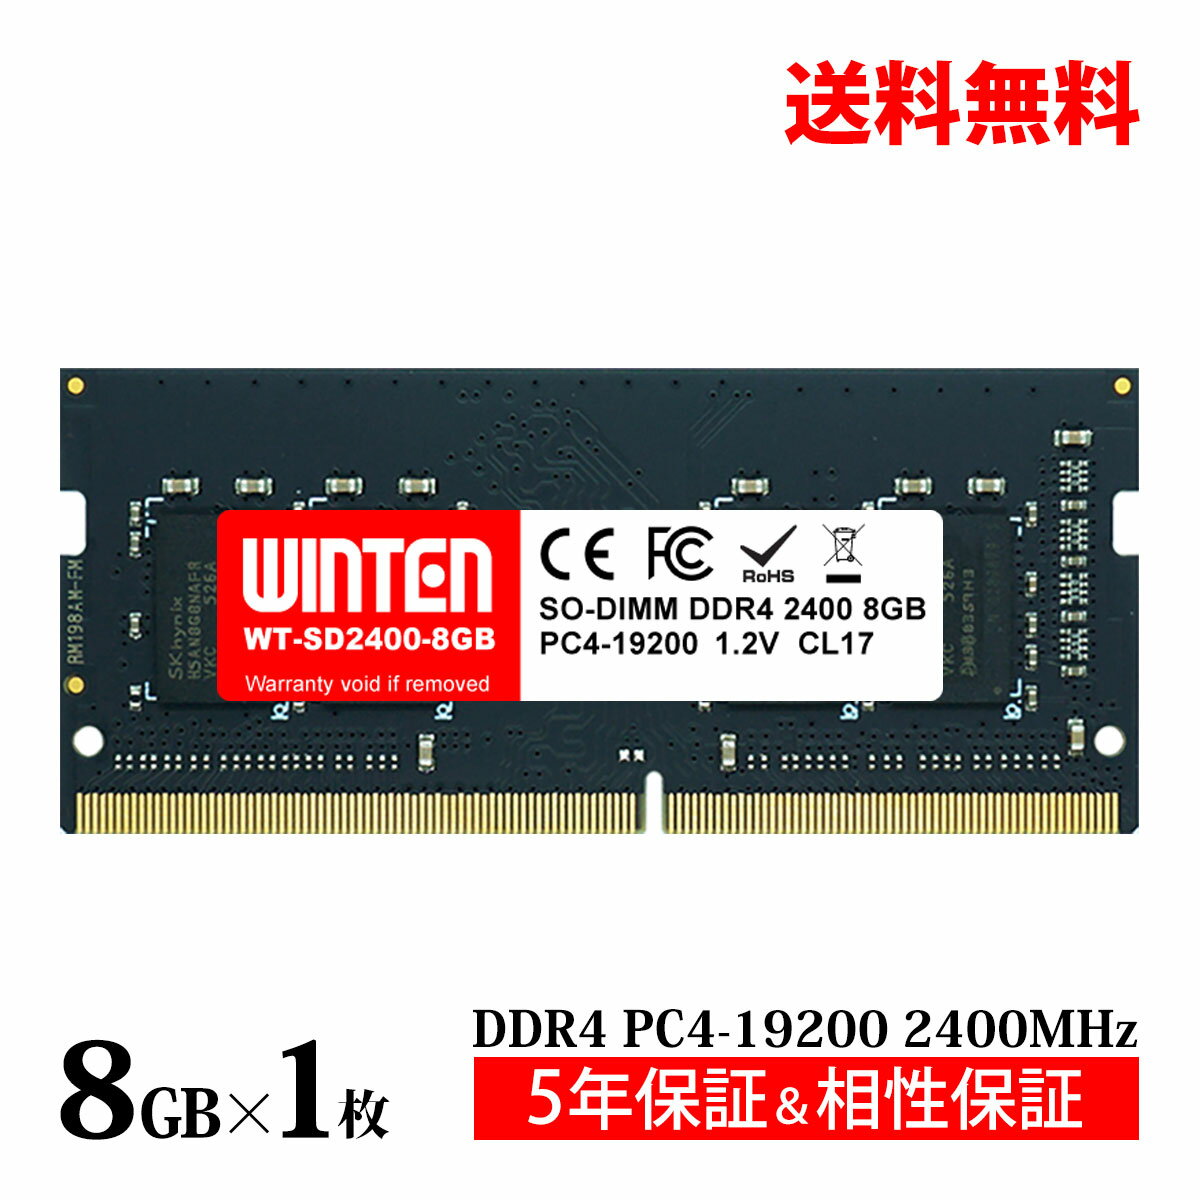 m[gPCp  8GB PC4-19200(DDR4 2400) WT-SD2400-8GB ۏ i5Nۏ   o DDR4 SDRAM SO-DIMM [ ݃[ 5606